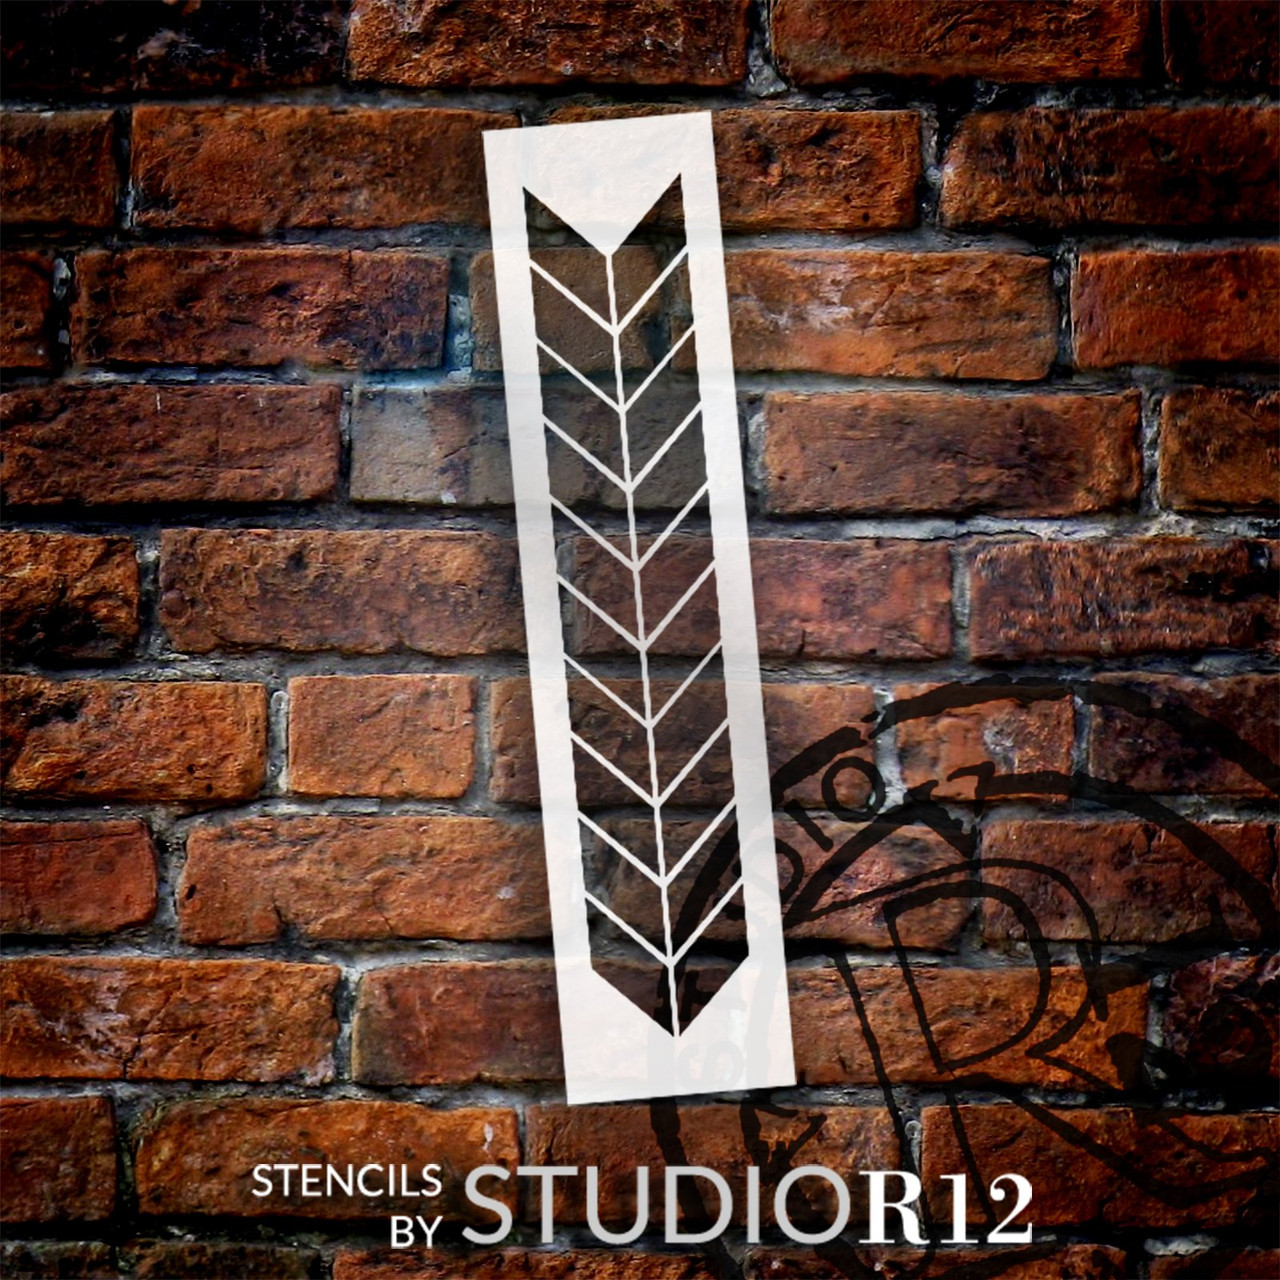 Chevron Band Pattern Stencil by StudioR12 | Craft DIY Arrow Backsplash Home Decor | Paint Wood Sign Border | Reusable Template | Select Size